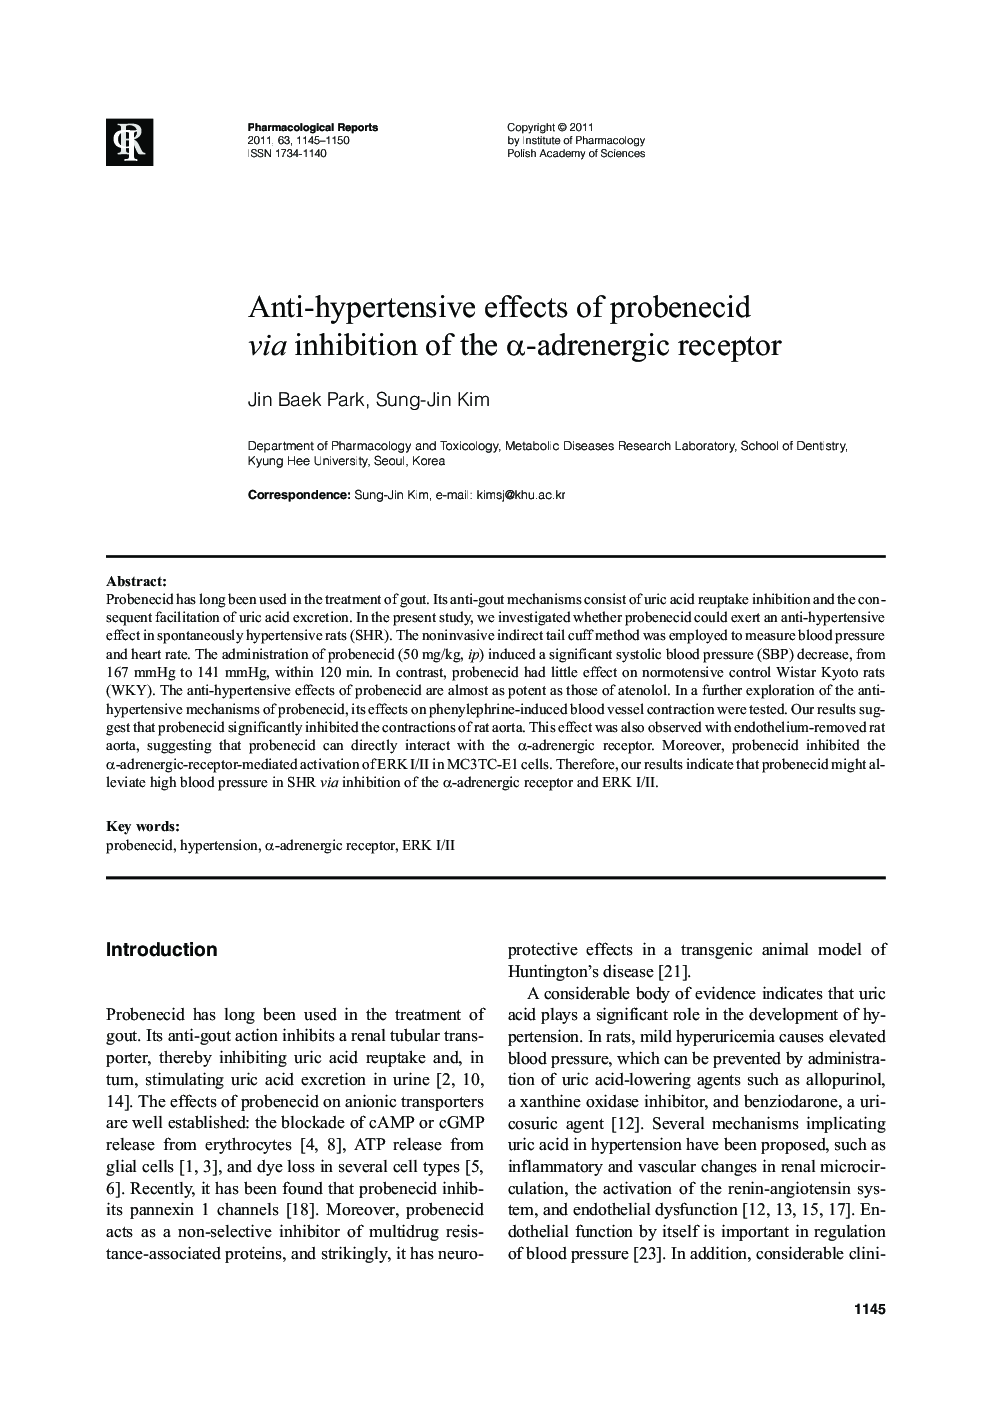 Anti-hypertensive effects of probenecid via inhibition of the α-adrenergic receptor